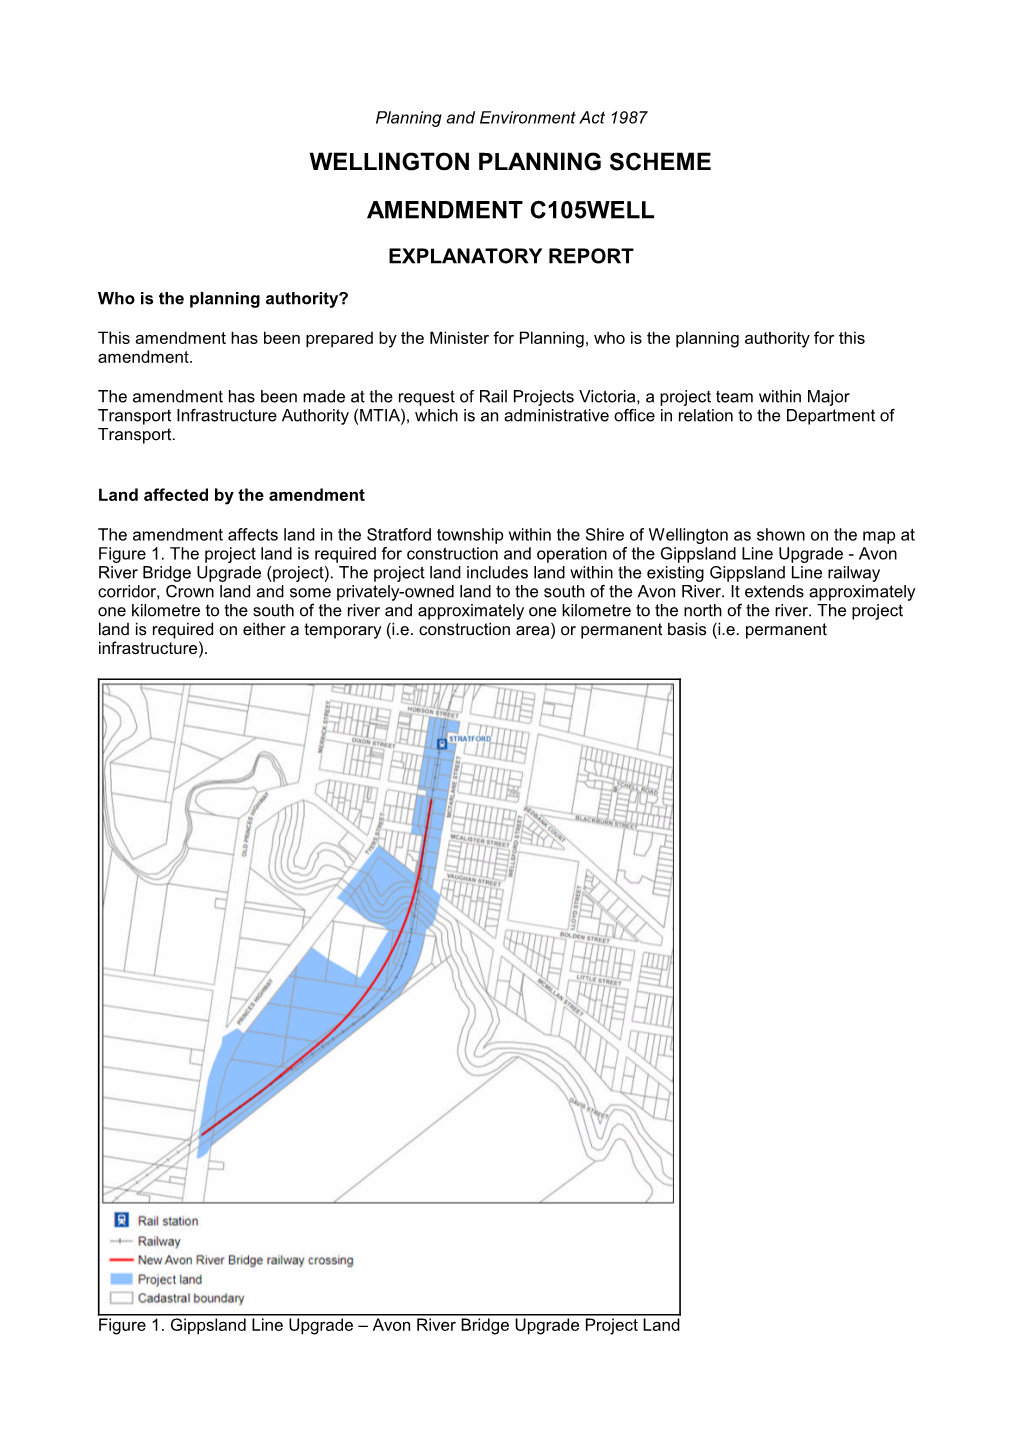 Wellington Planning Scheme Amendment C105well